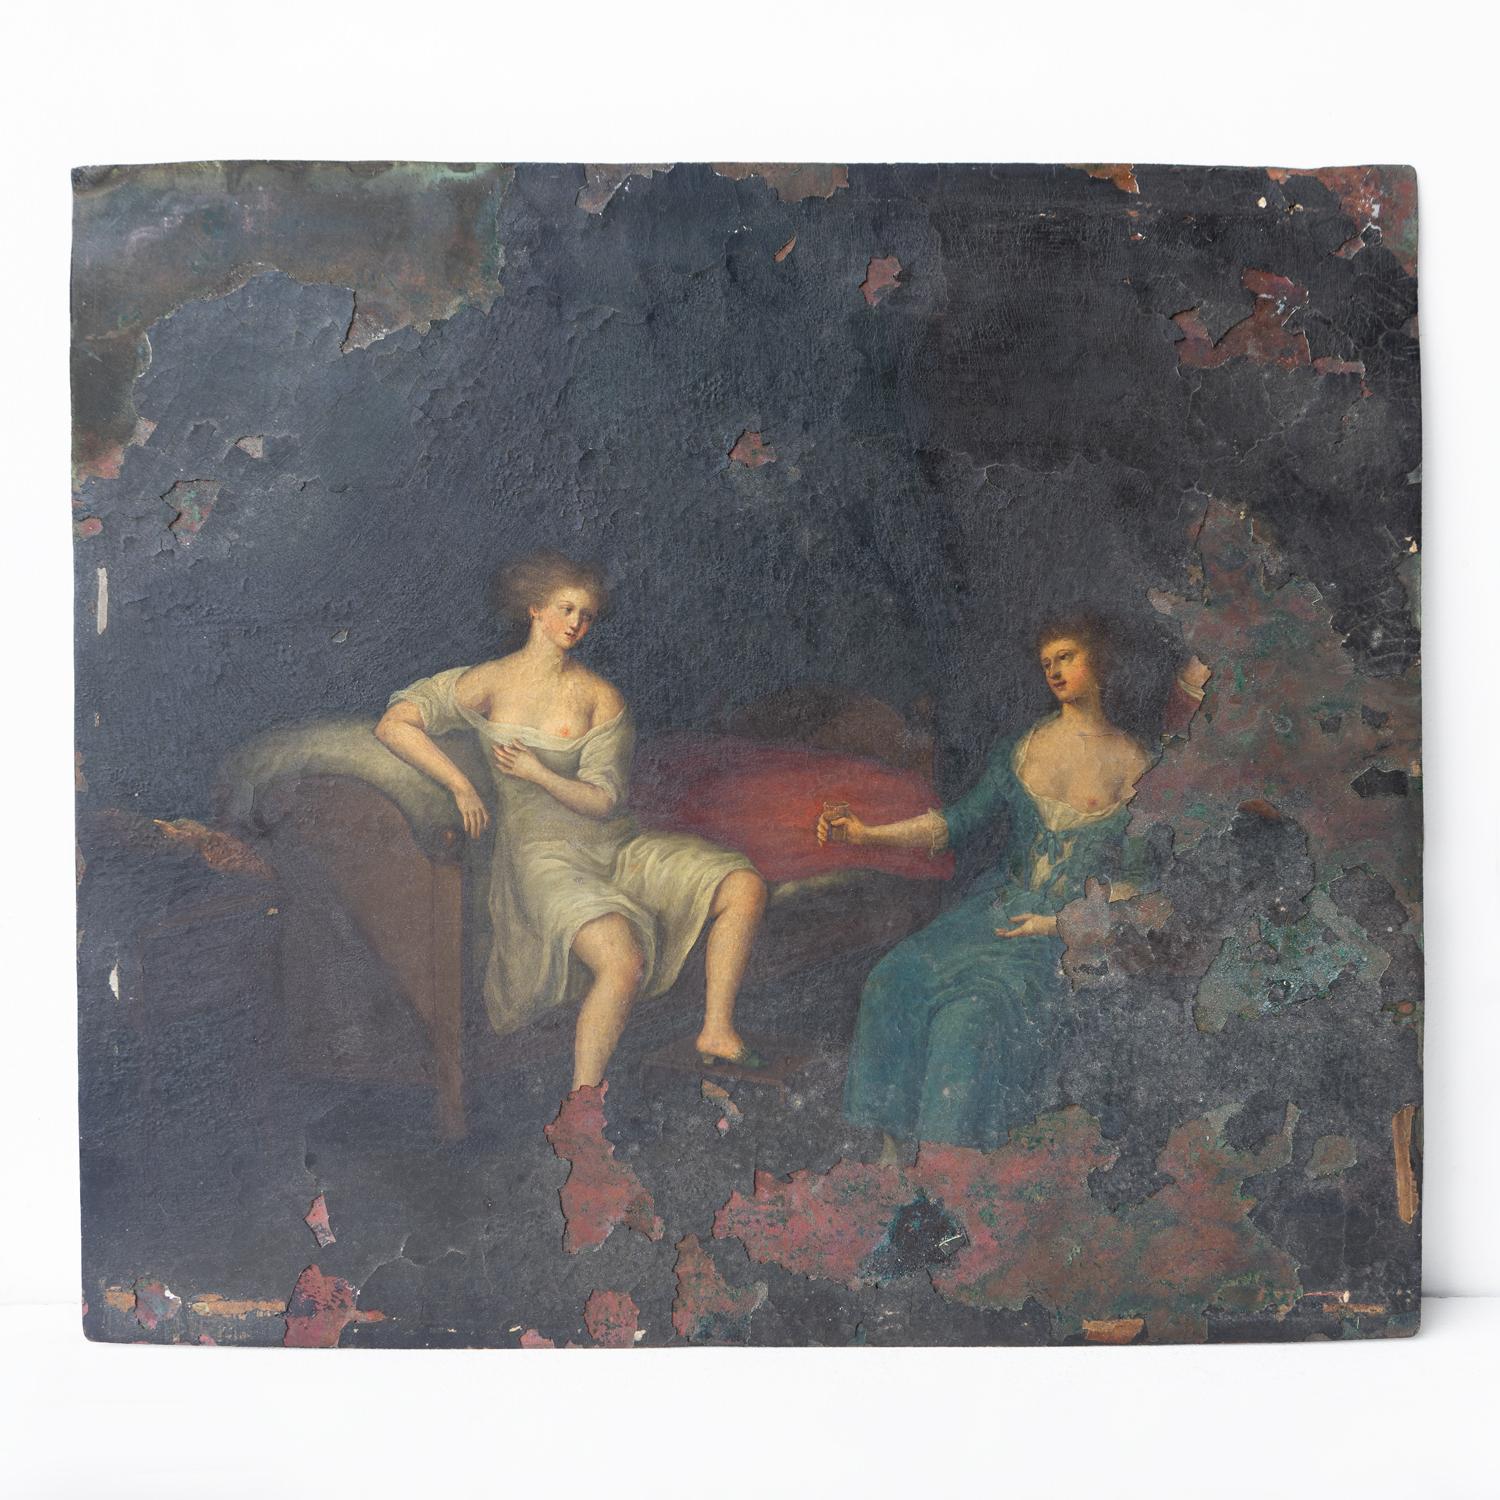 Belgian Brothel Interior Scene, Antique Original Oil On Copper Painting, Late 17th C. For Sale